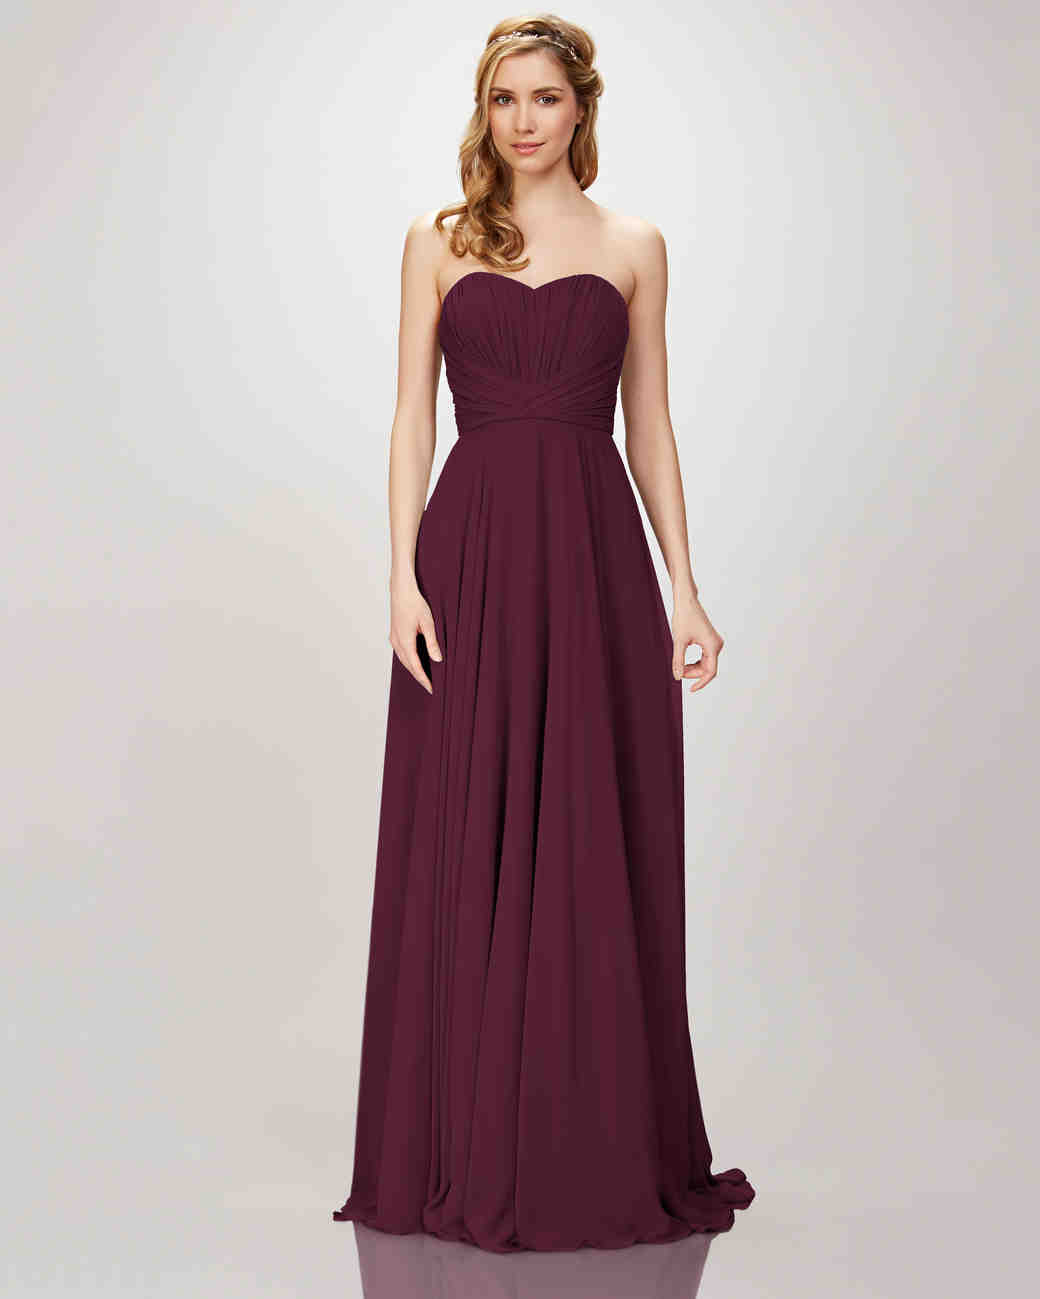 Burgundy Bridesmaid Dresses | Martha Stewart Weddings